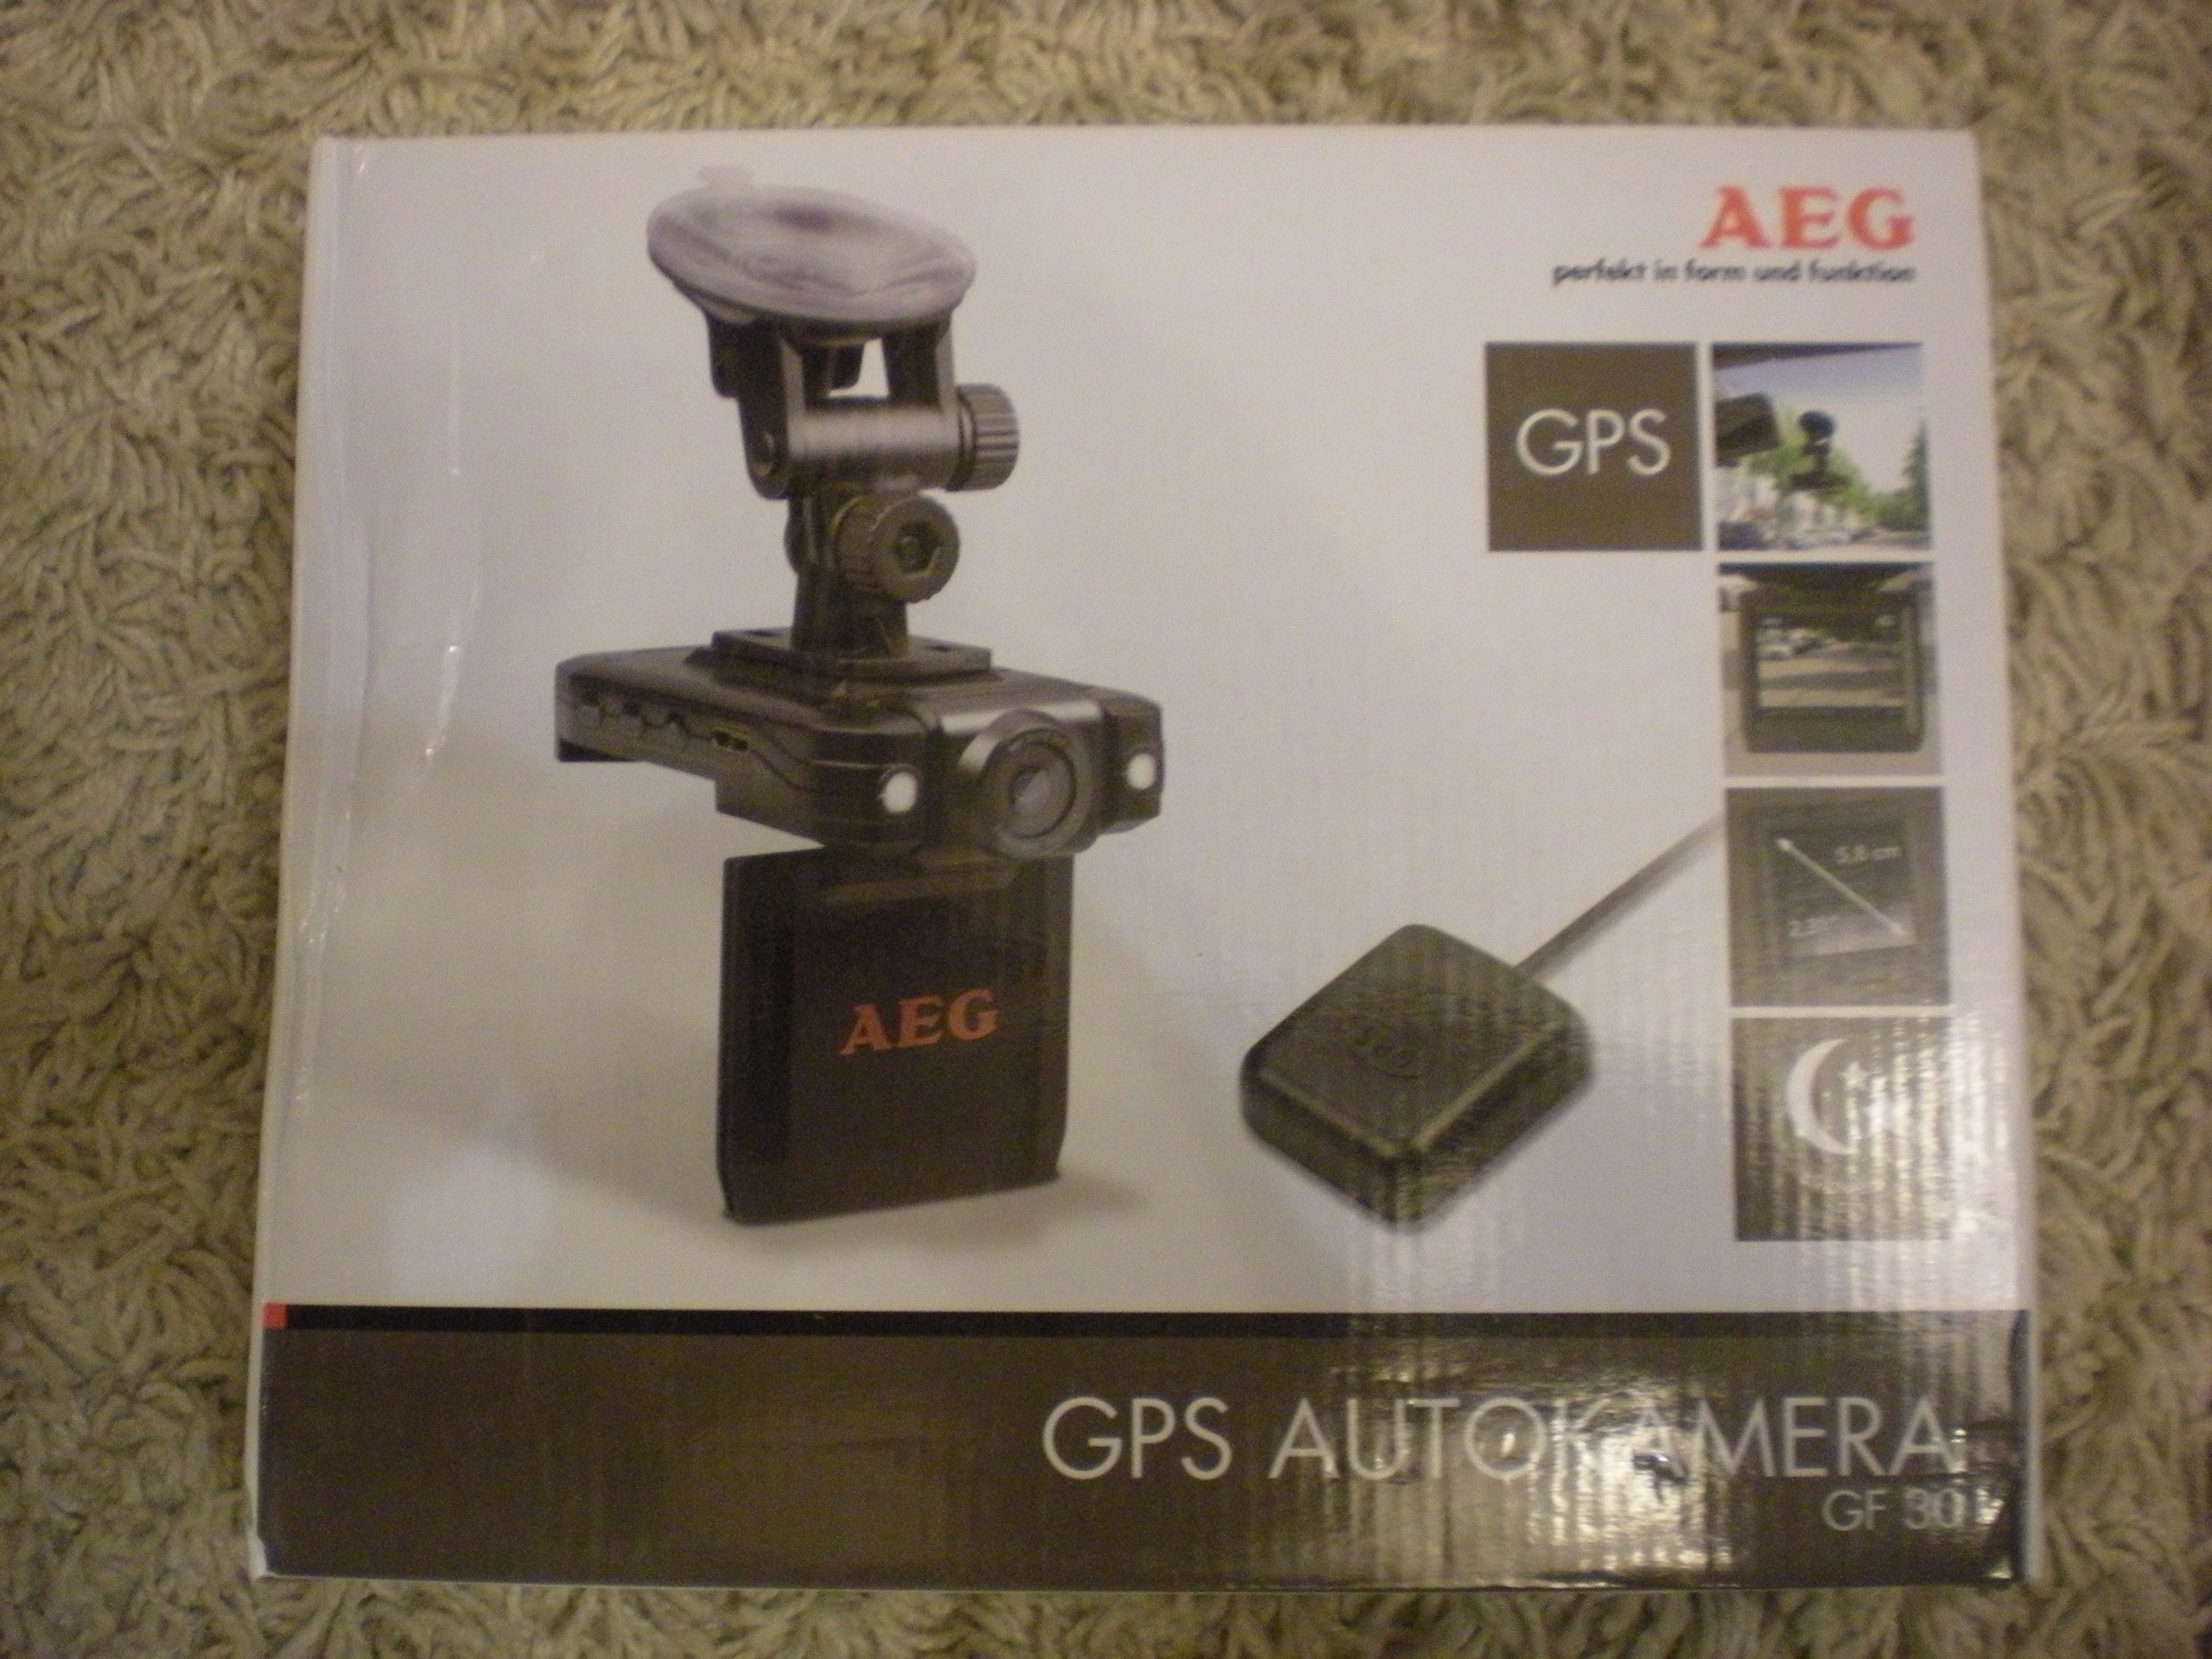 AEG gf 30 gps auto kamera NOWA - 7036211756 - oficjalne archiwum Allegro